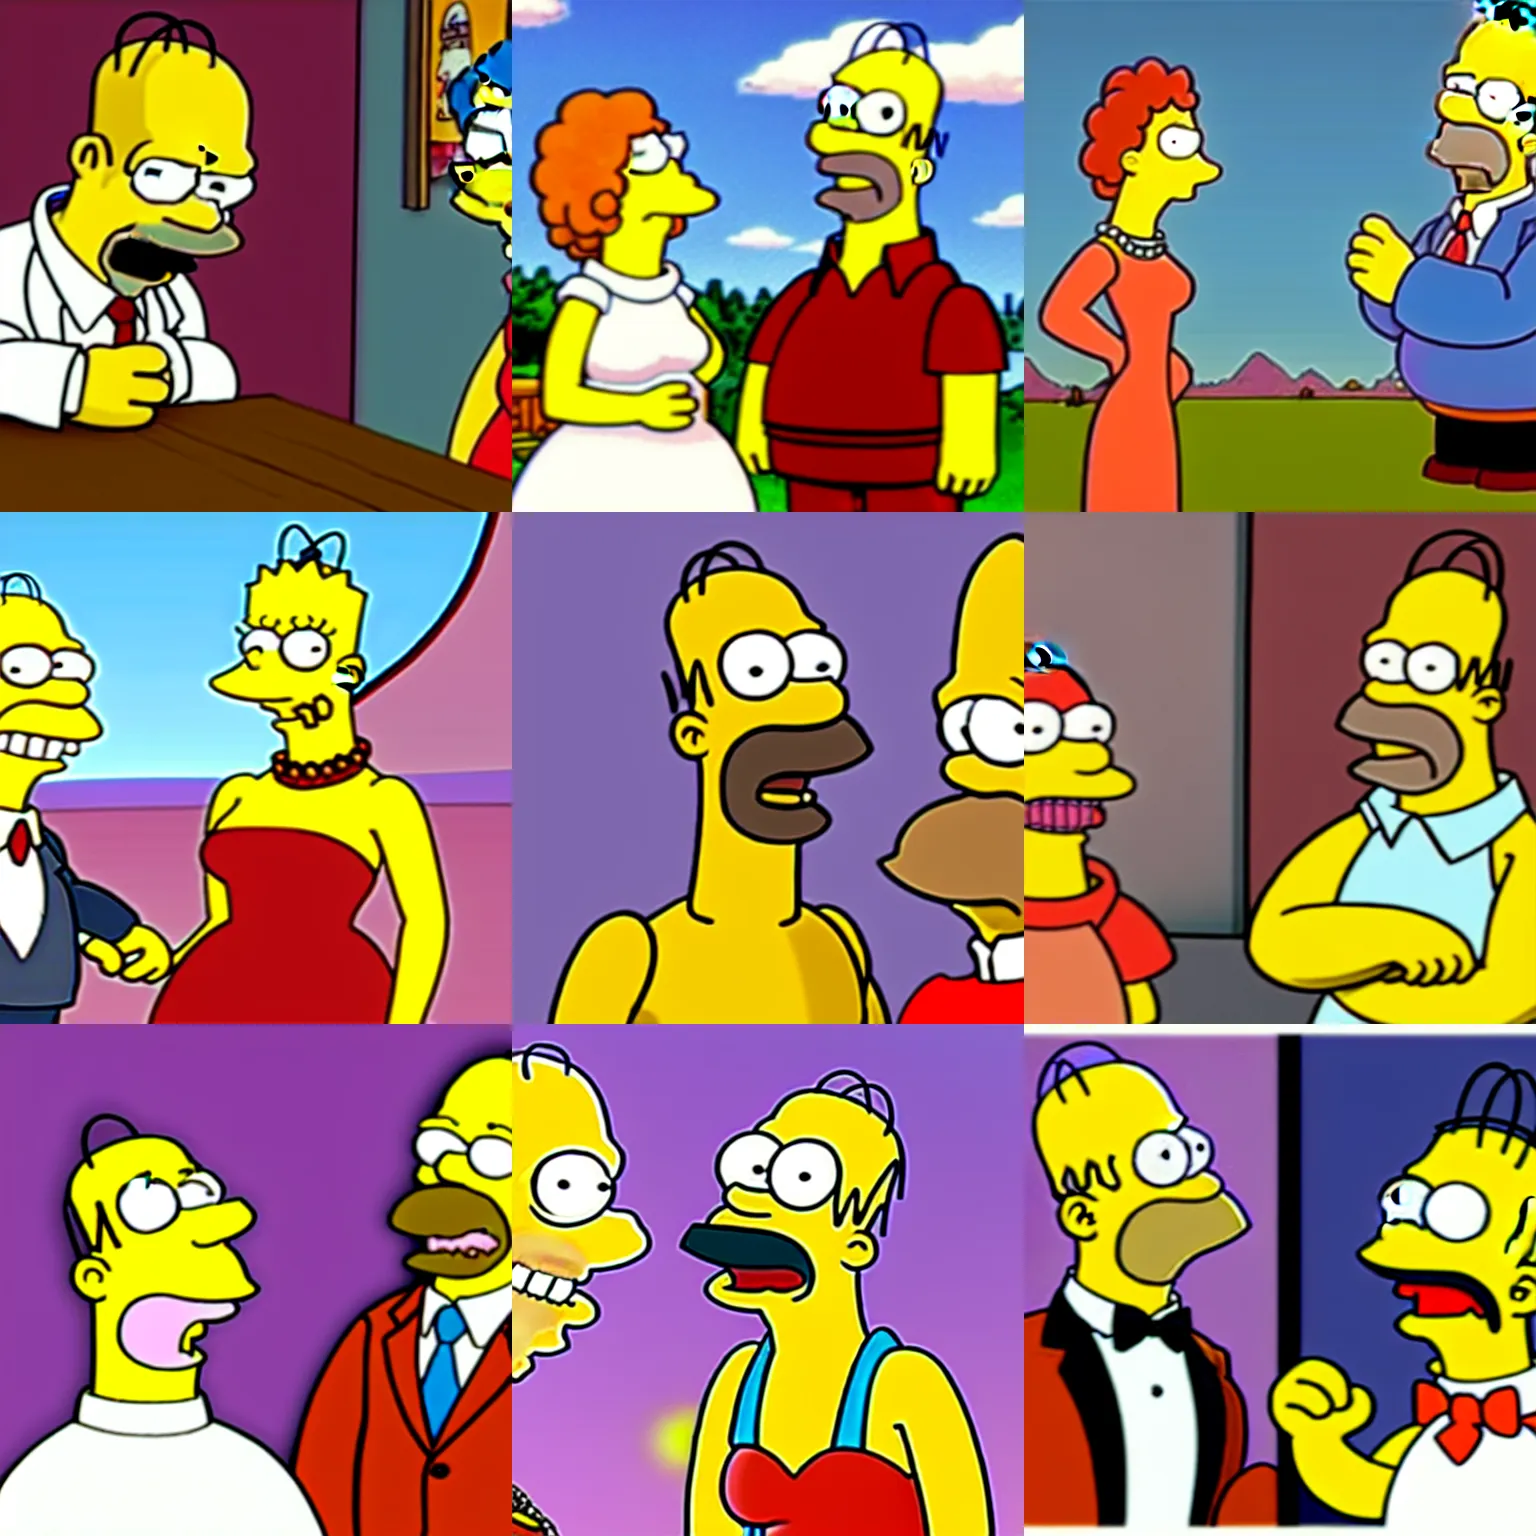 Prompt: Homer Simpson getting married to Nigel Thornberry, cartoon